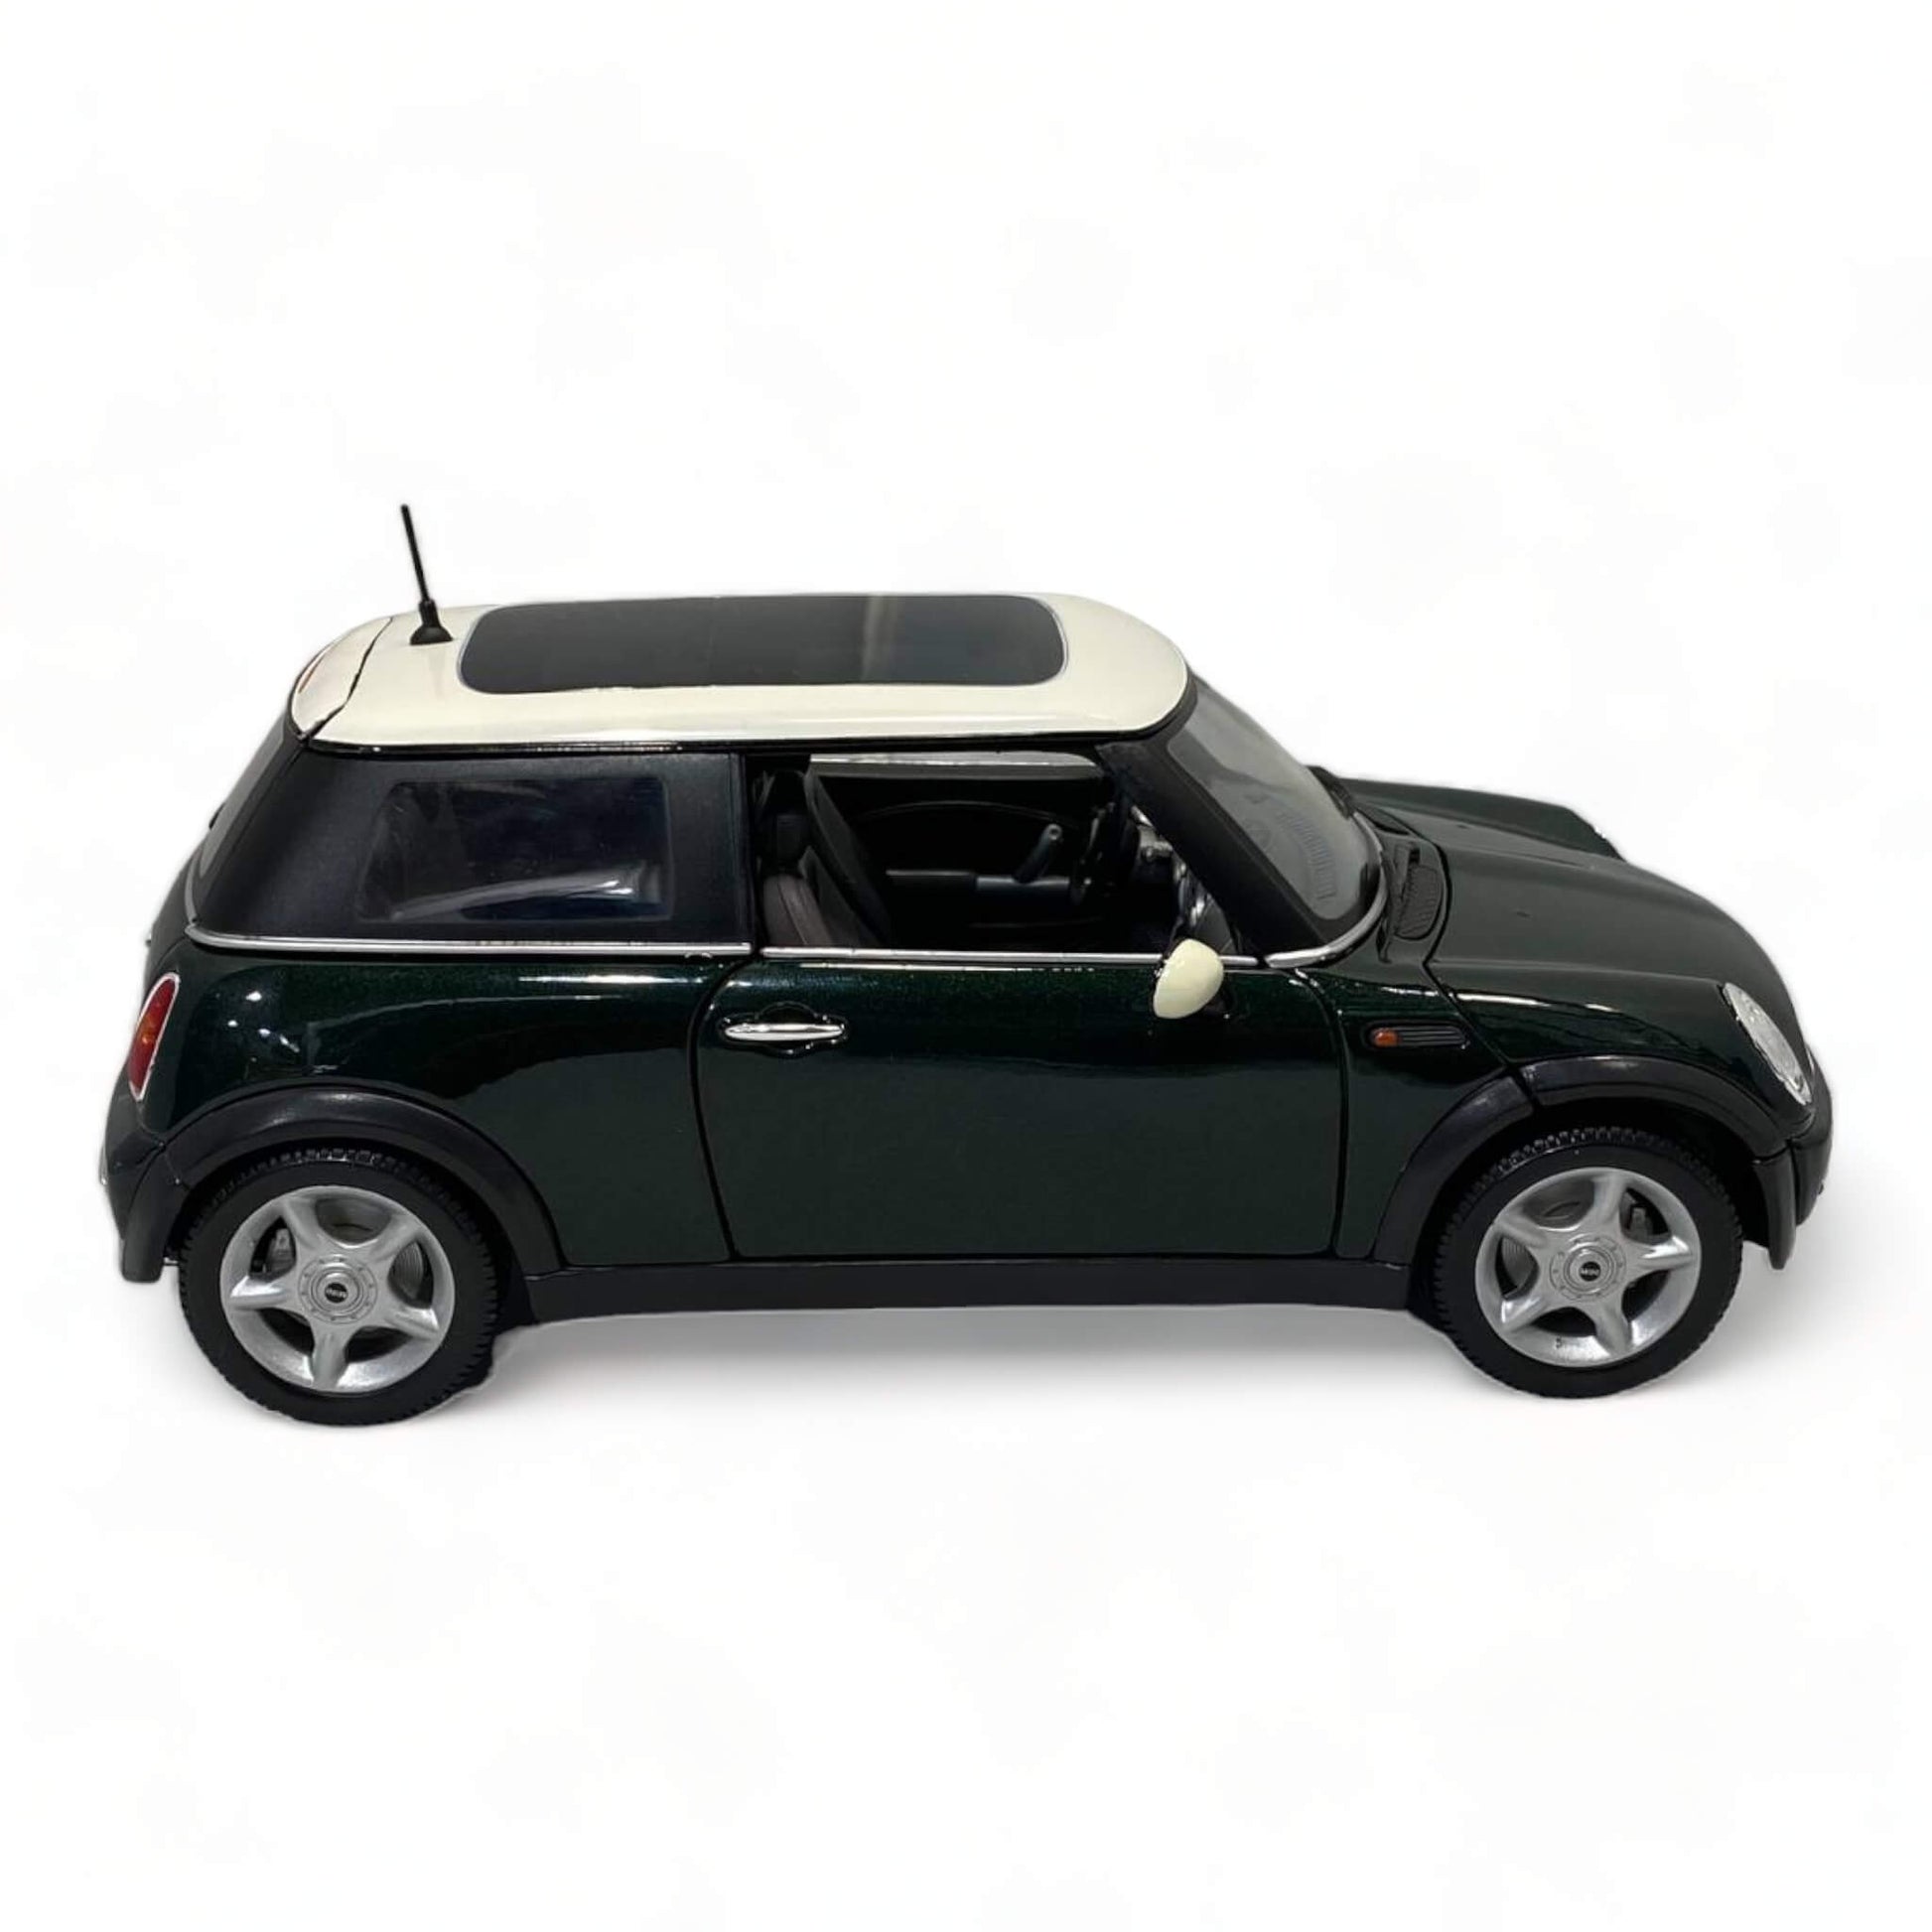 1/18 Diecast Maisto Mini Cooper Sun Roof Dark Green Scale Model Car Dturman Dubai UAE|Sold in Dturman.com Dubai UAE.